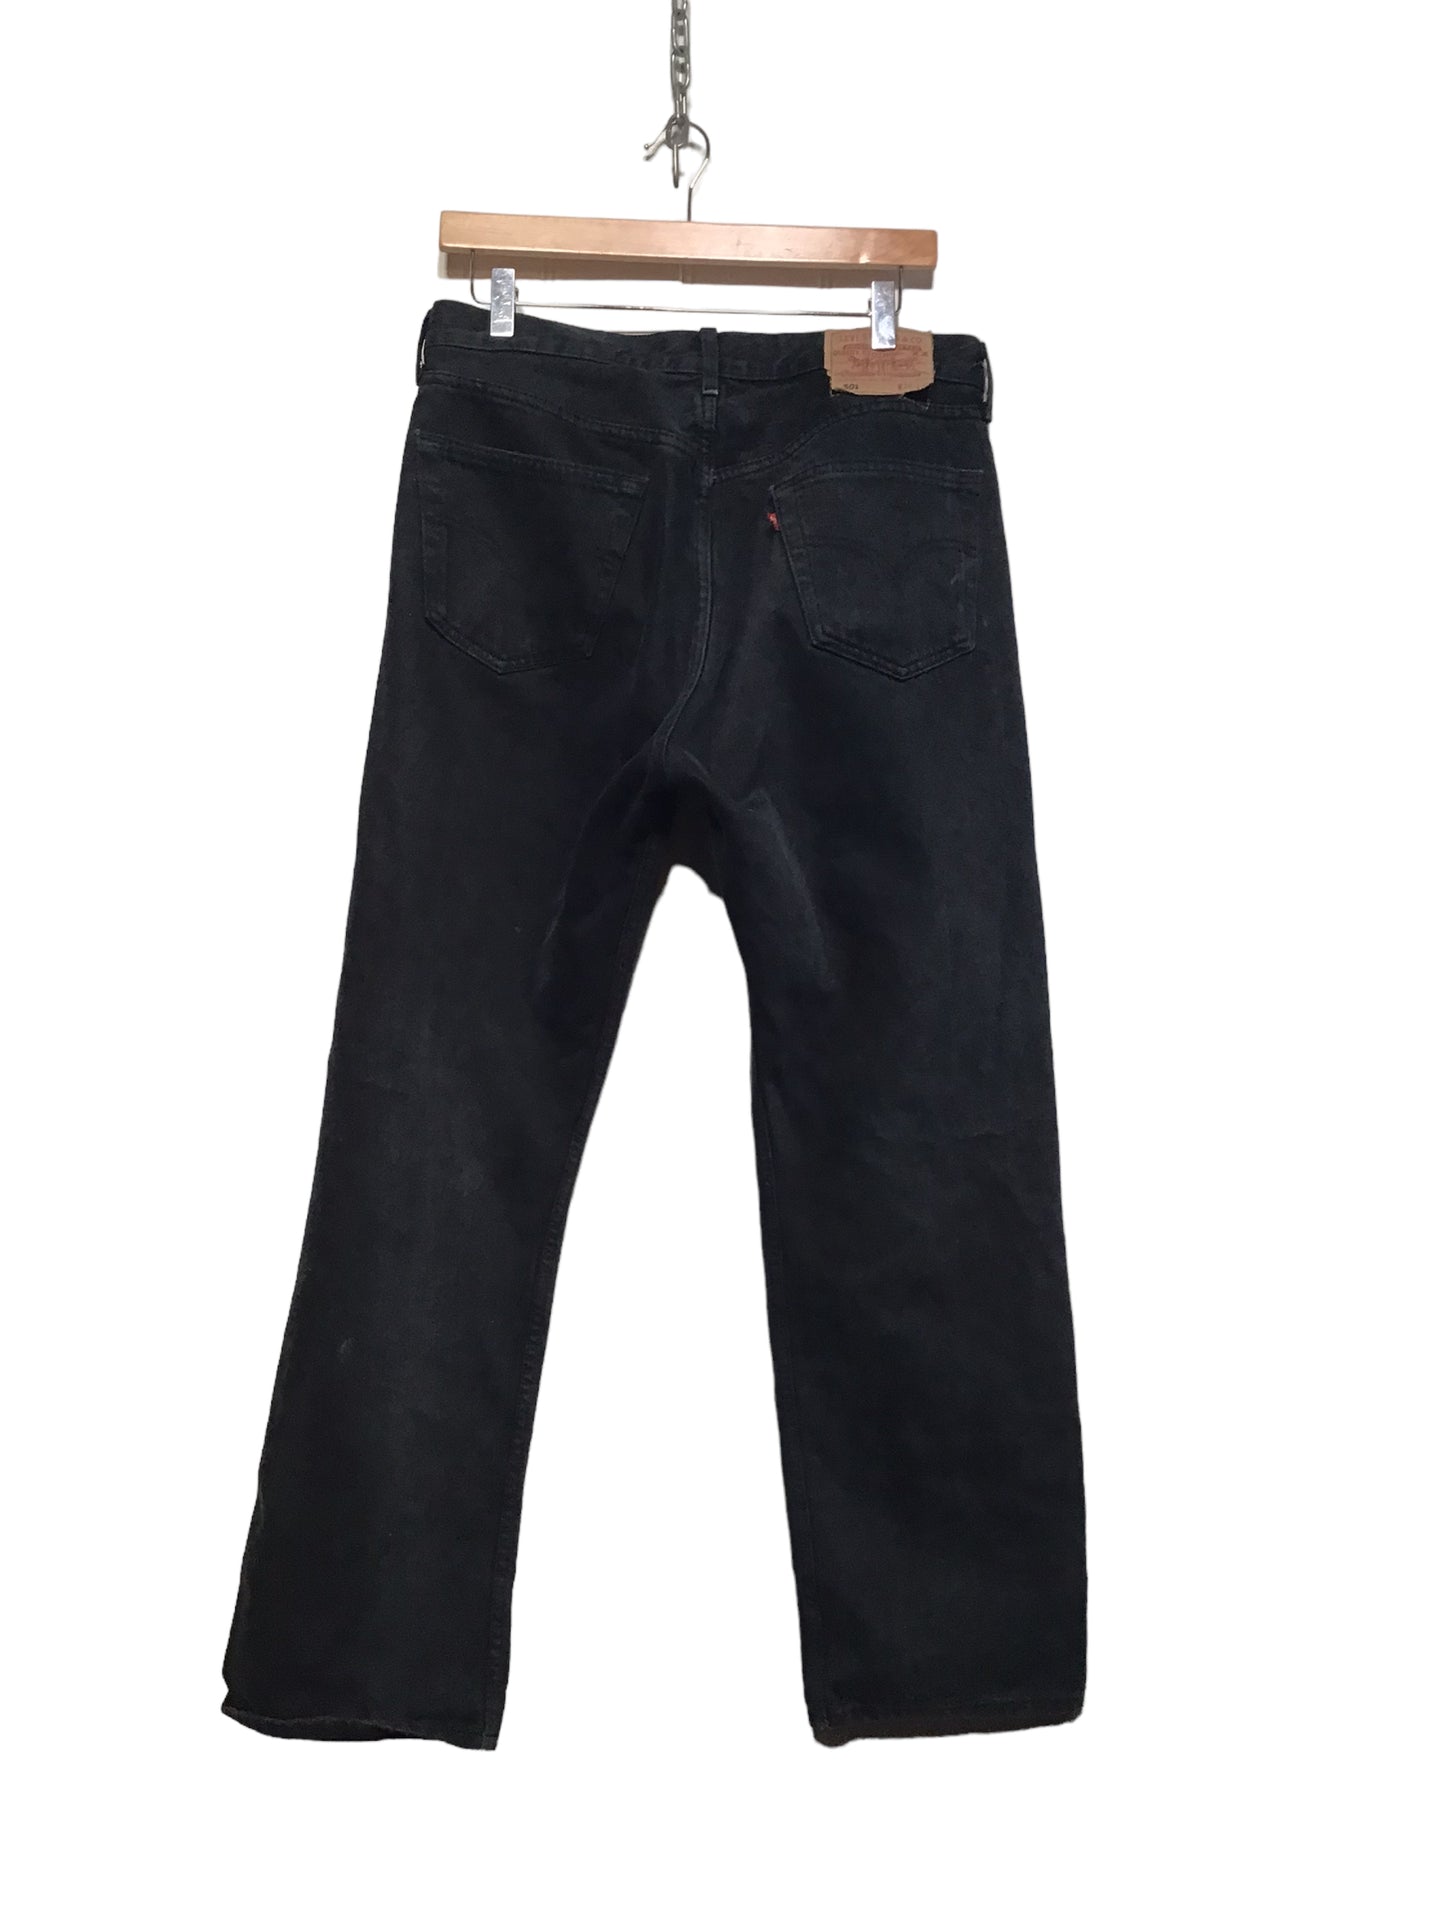 Levi’s 501 Black Jeans (36x30)